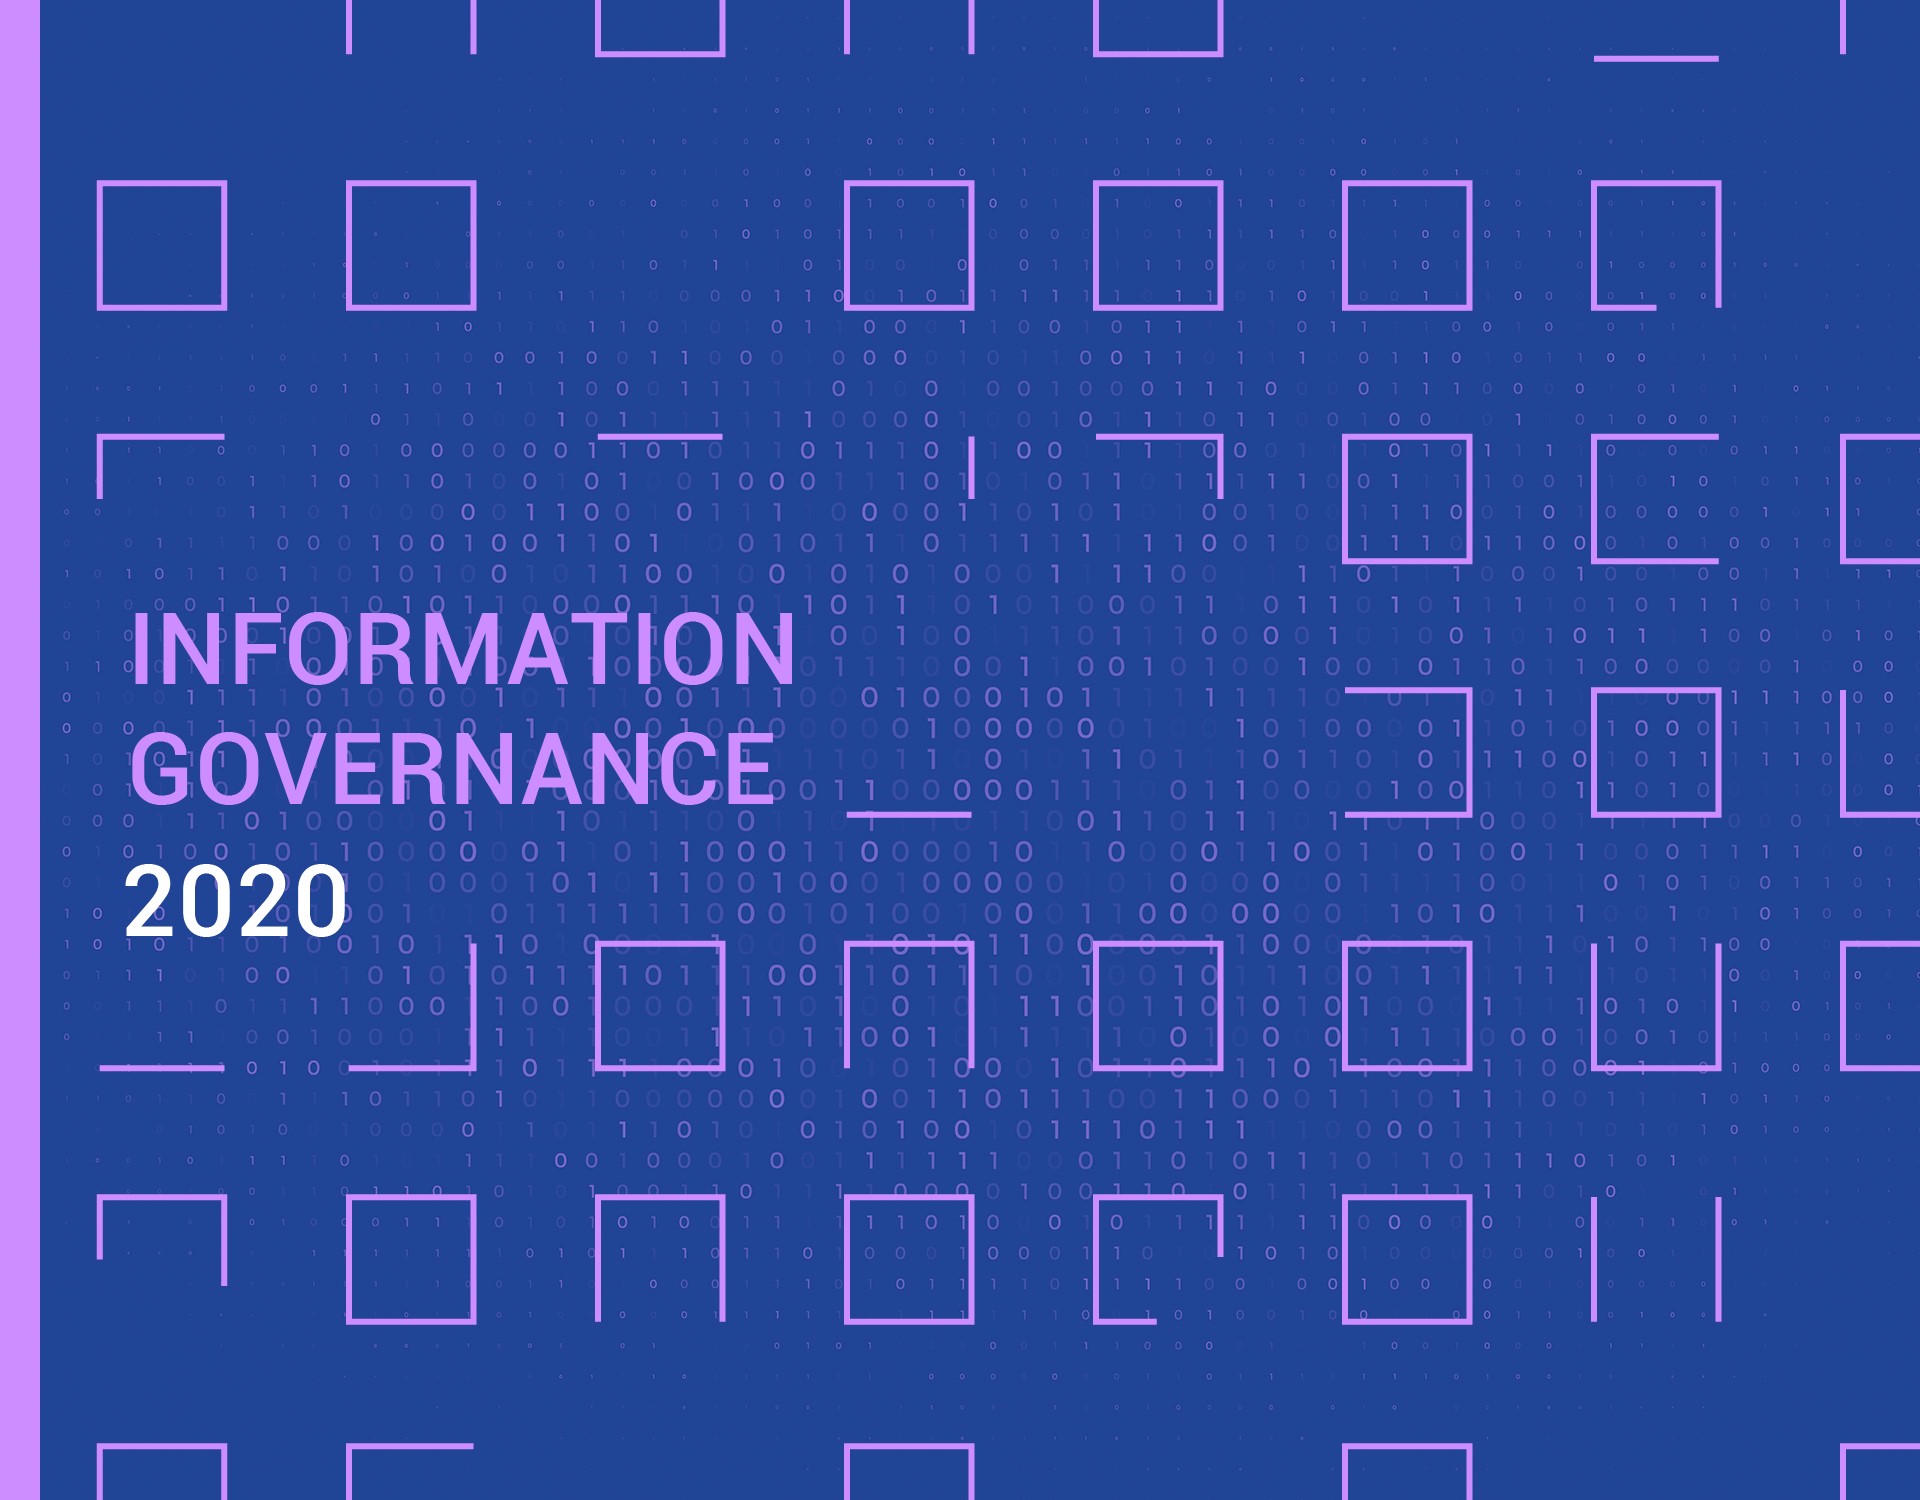 Rapporto Information Governance 2020 - The data matrix